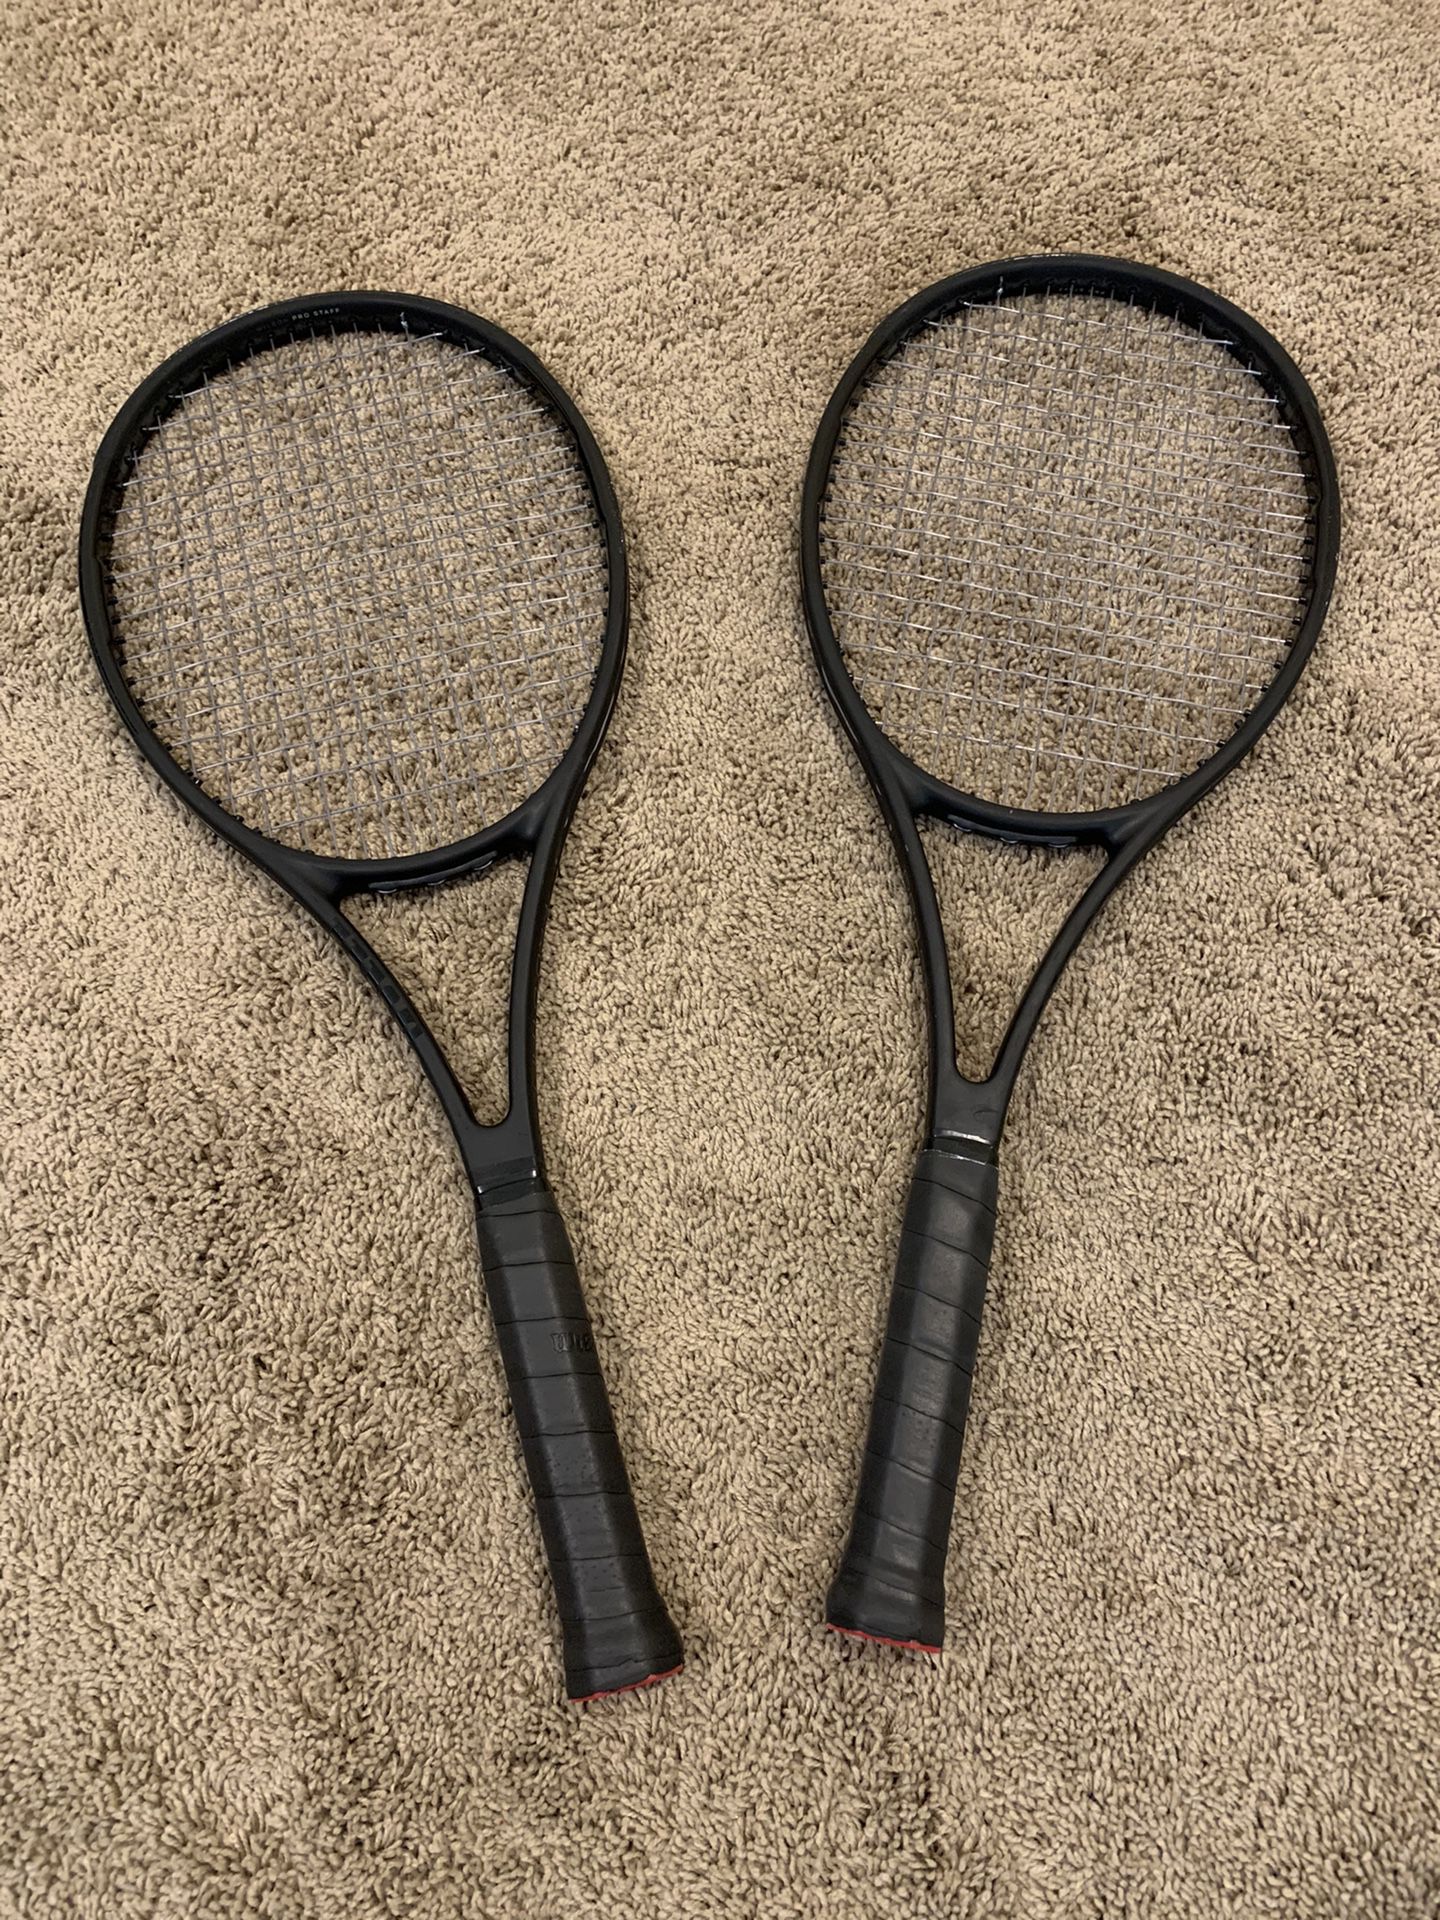 Wilson Pro Staff 97 v11 (2x) tennis rackets